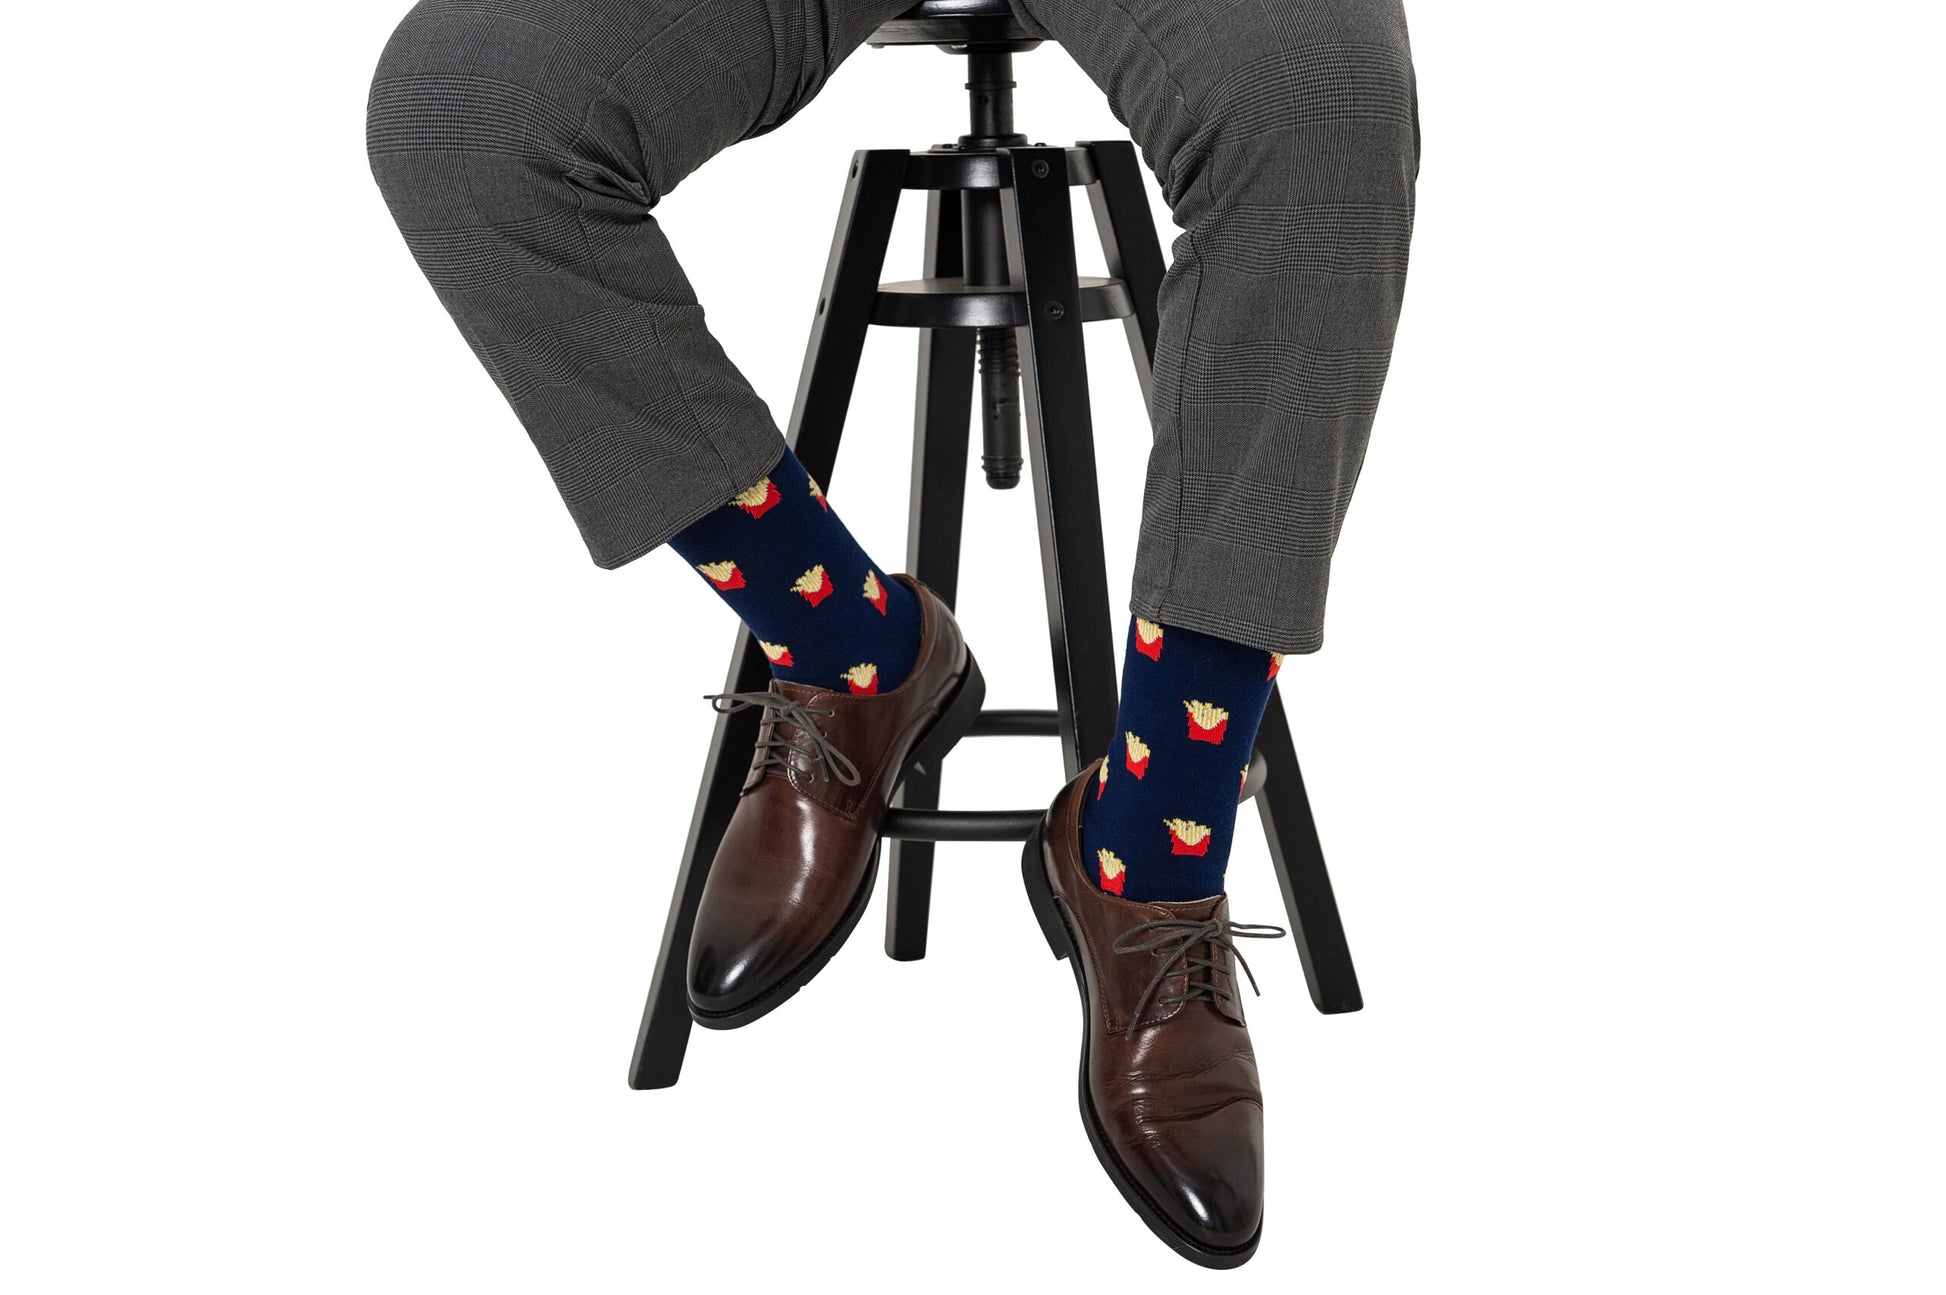 A man wearing Fries Socks sitting on a stool.